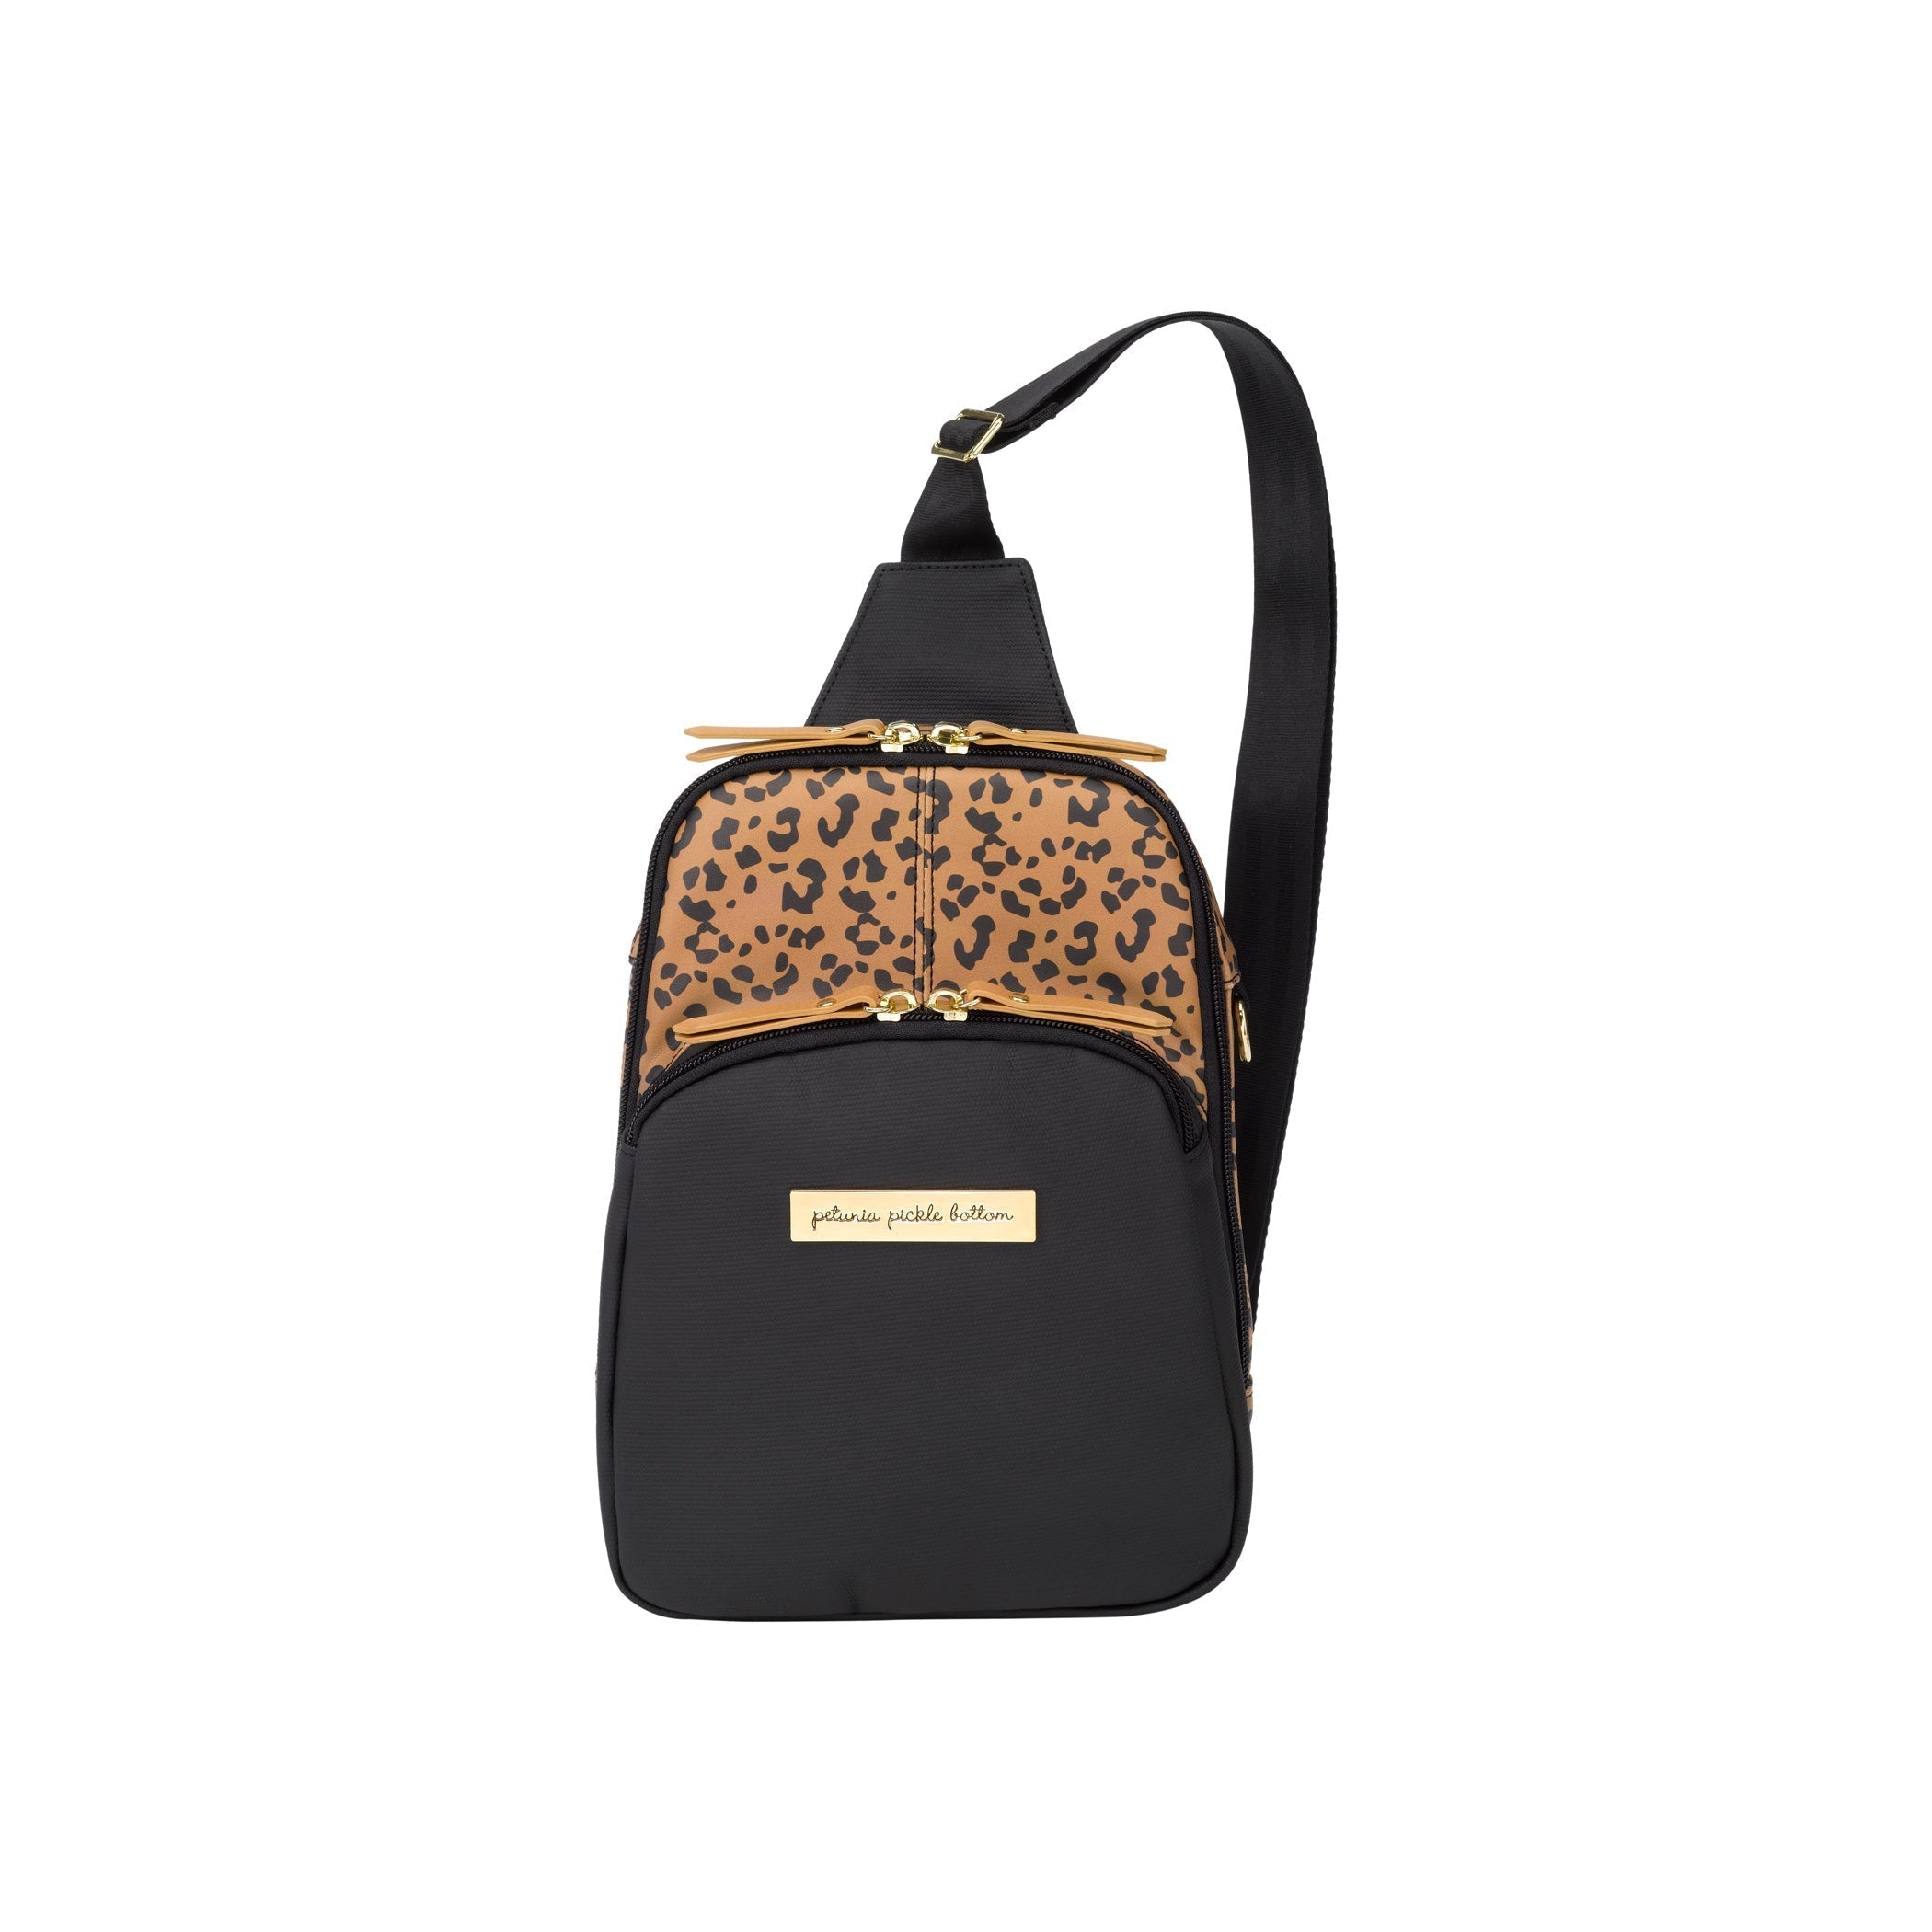 Petunia Pickle Bottom Criss-Cross Sling in Leopard Leatherette Handbag